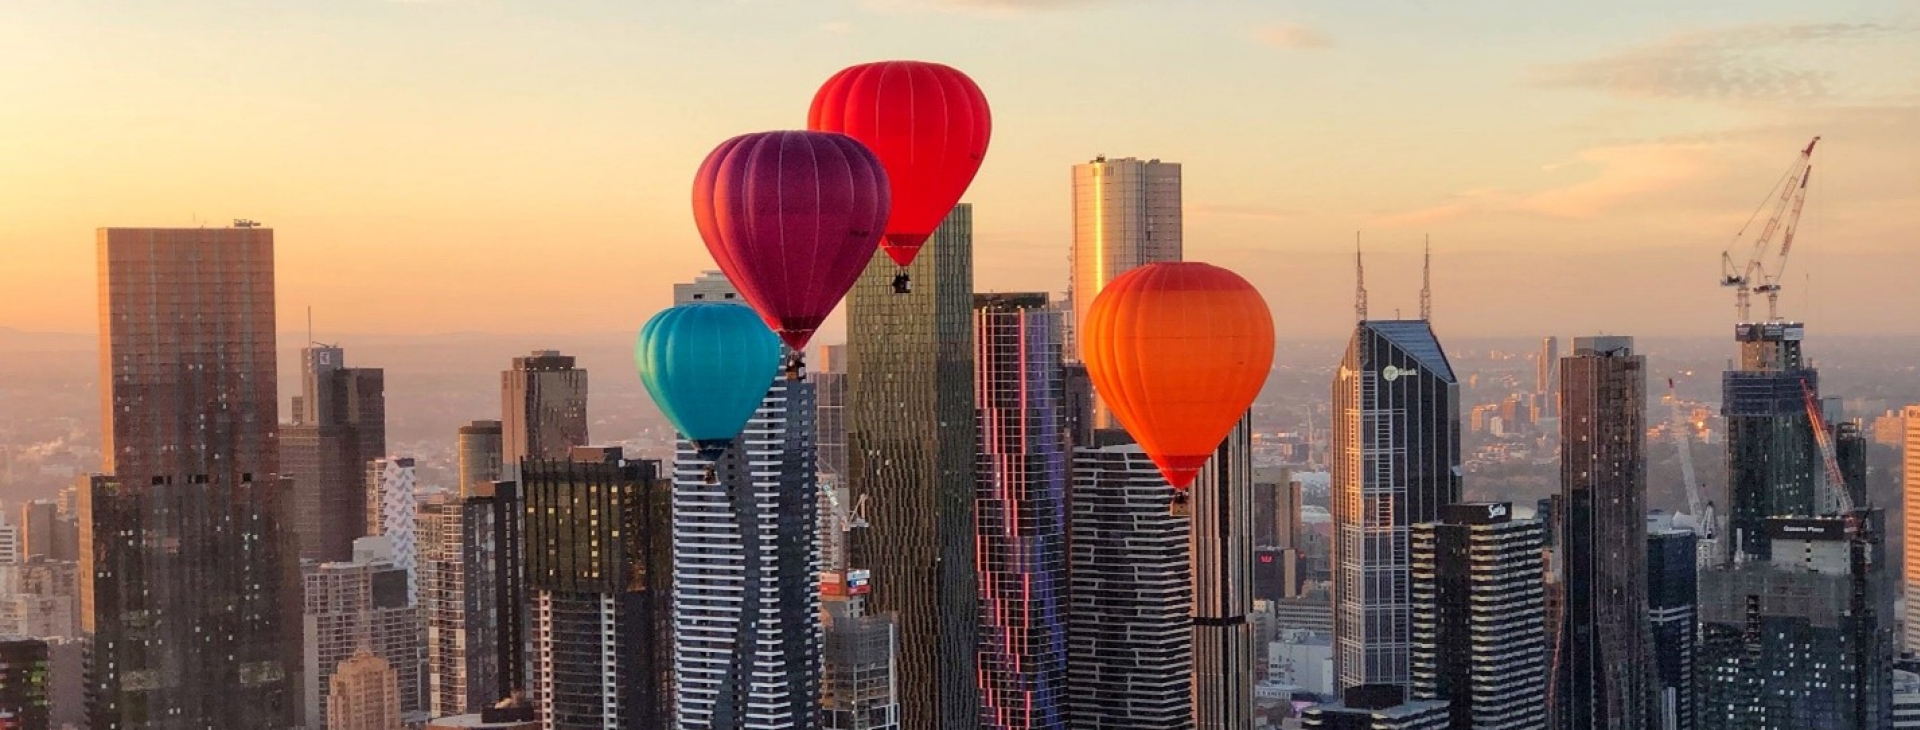 Melbourne Sunrise Hot Air Balloon Flight (c) Visit Victoria